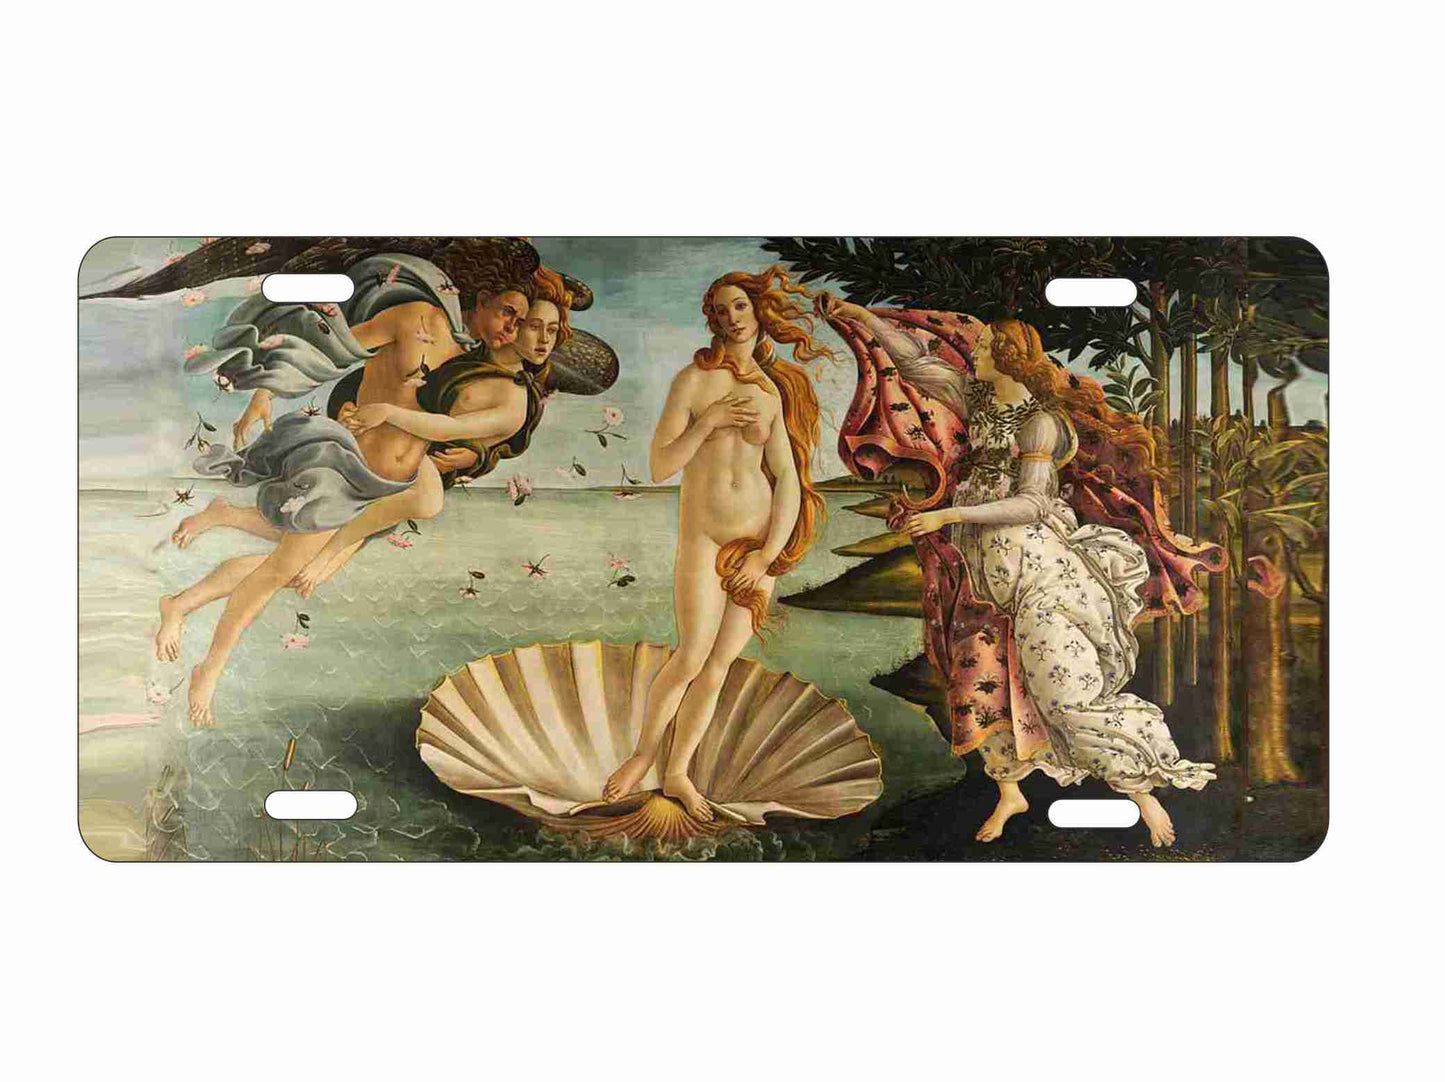 Birth of Venus aluminum license plate decorative vanity front plate